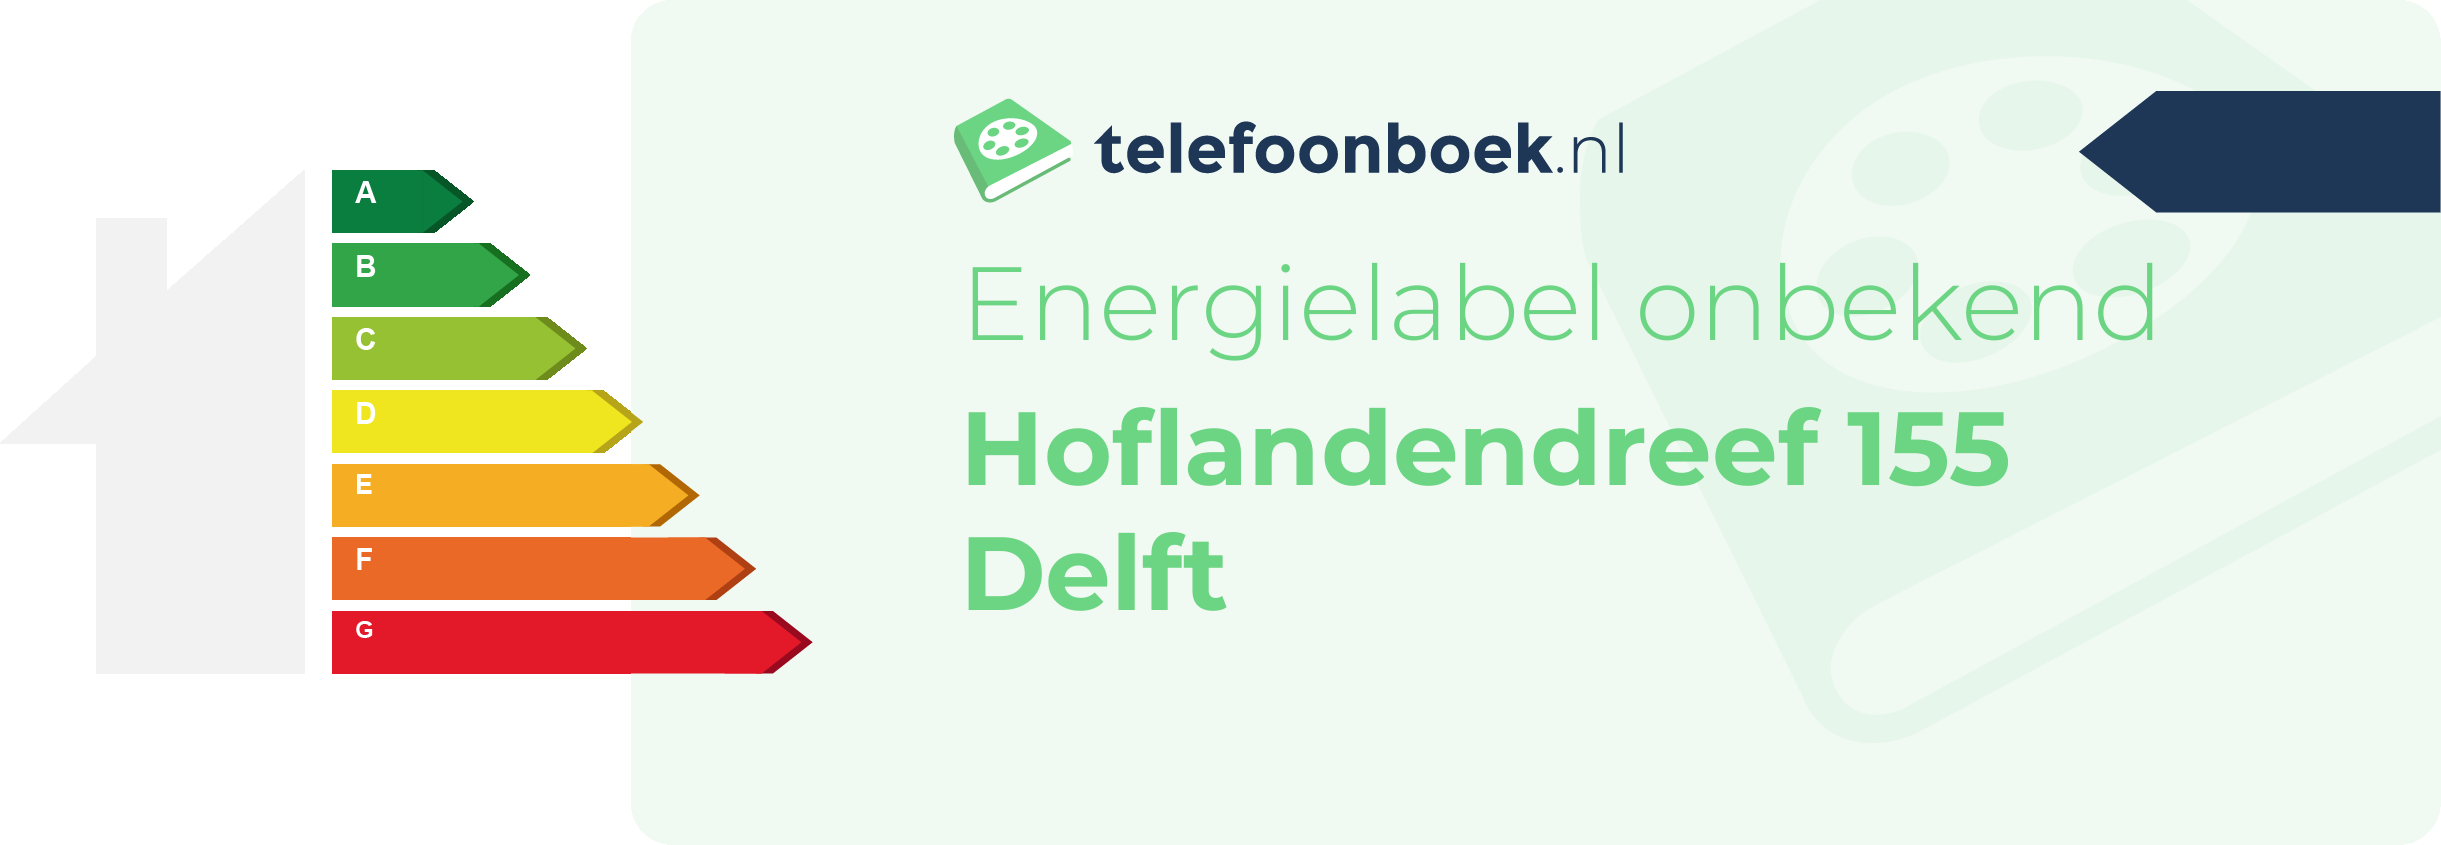 Energielabel Hoflandendreef 155 Delft